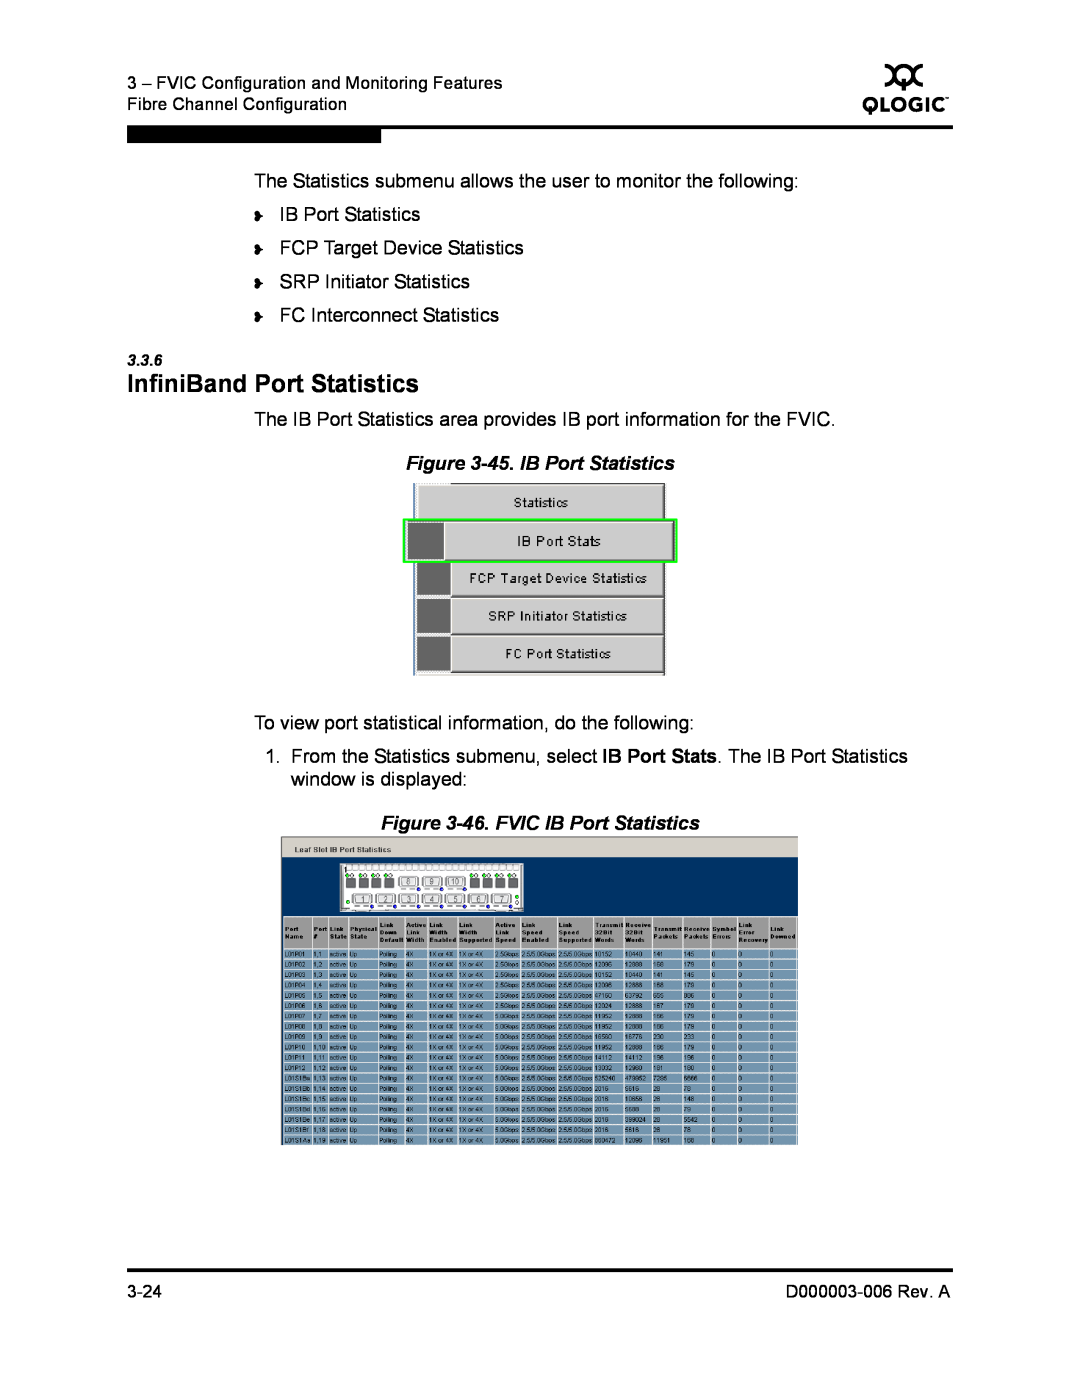 Q-Logic 9000 manual InfiniBand Port Statistics, 45. IB Port Statistics, 46. FVIC IB Port Statistics 